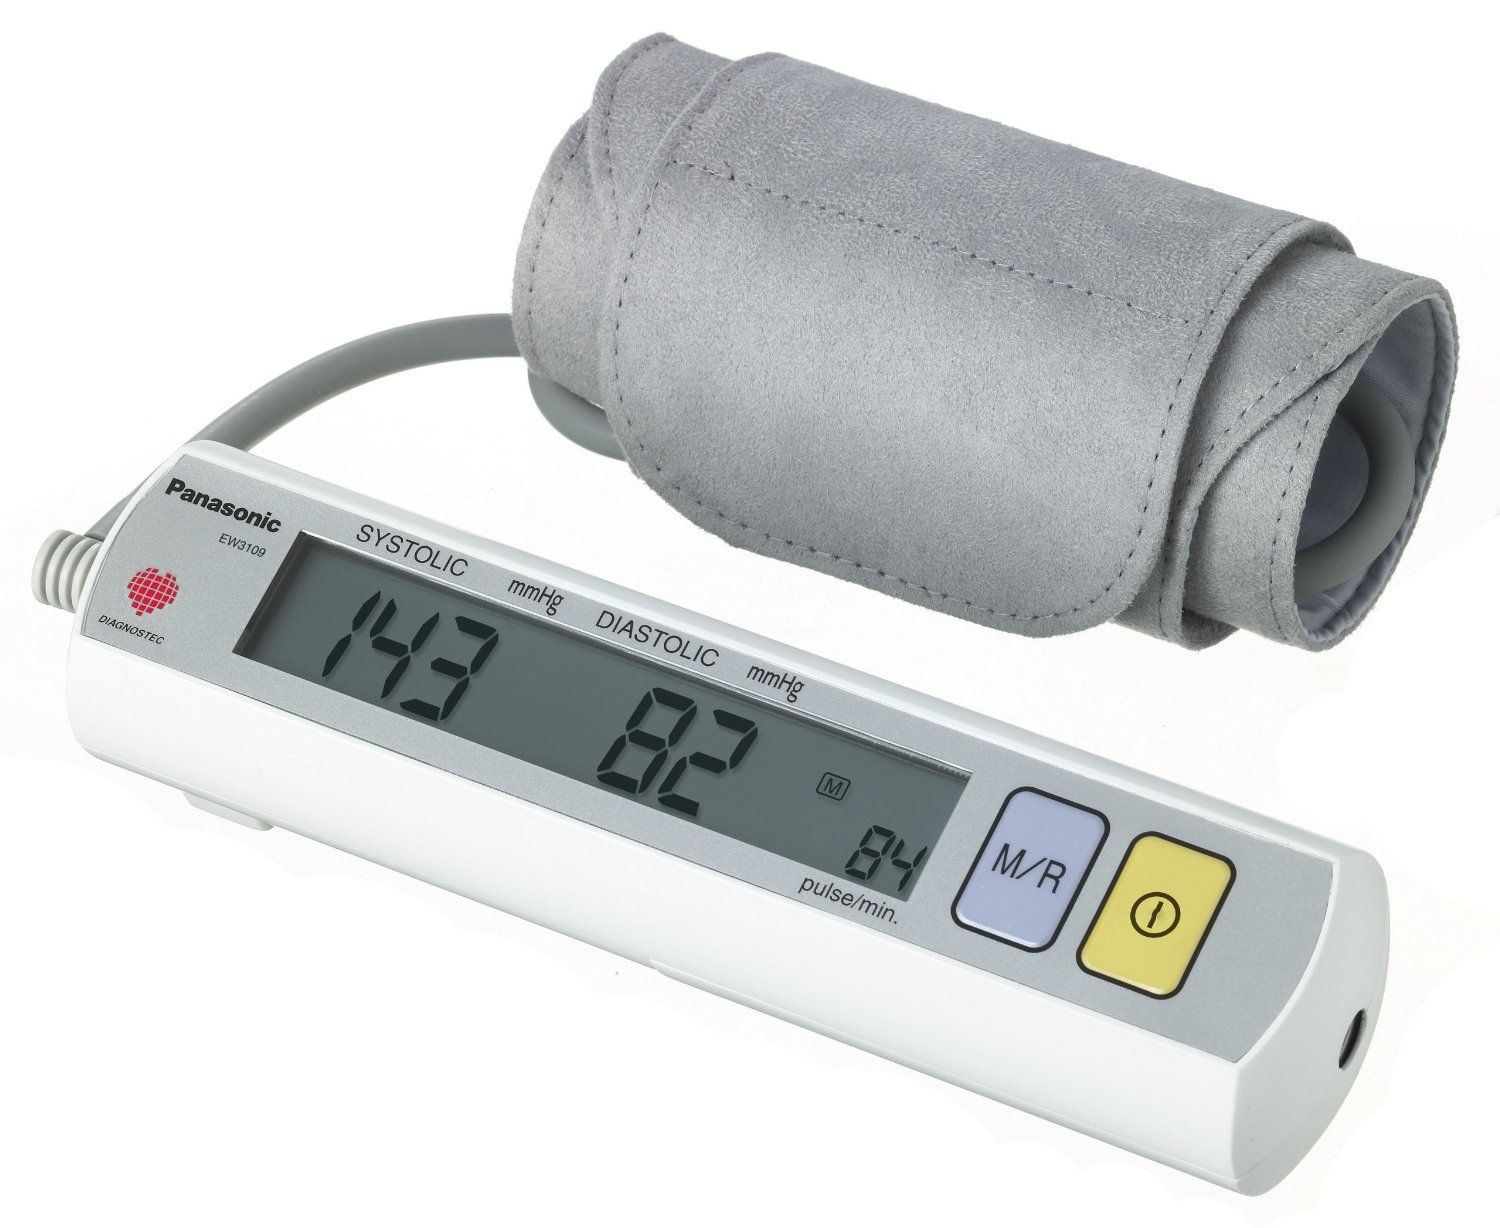 Panasonic Diagnostec Ew3109 Blood Pressure Monitor For £5174